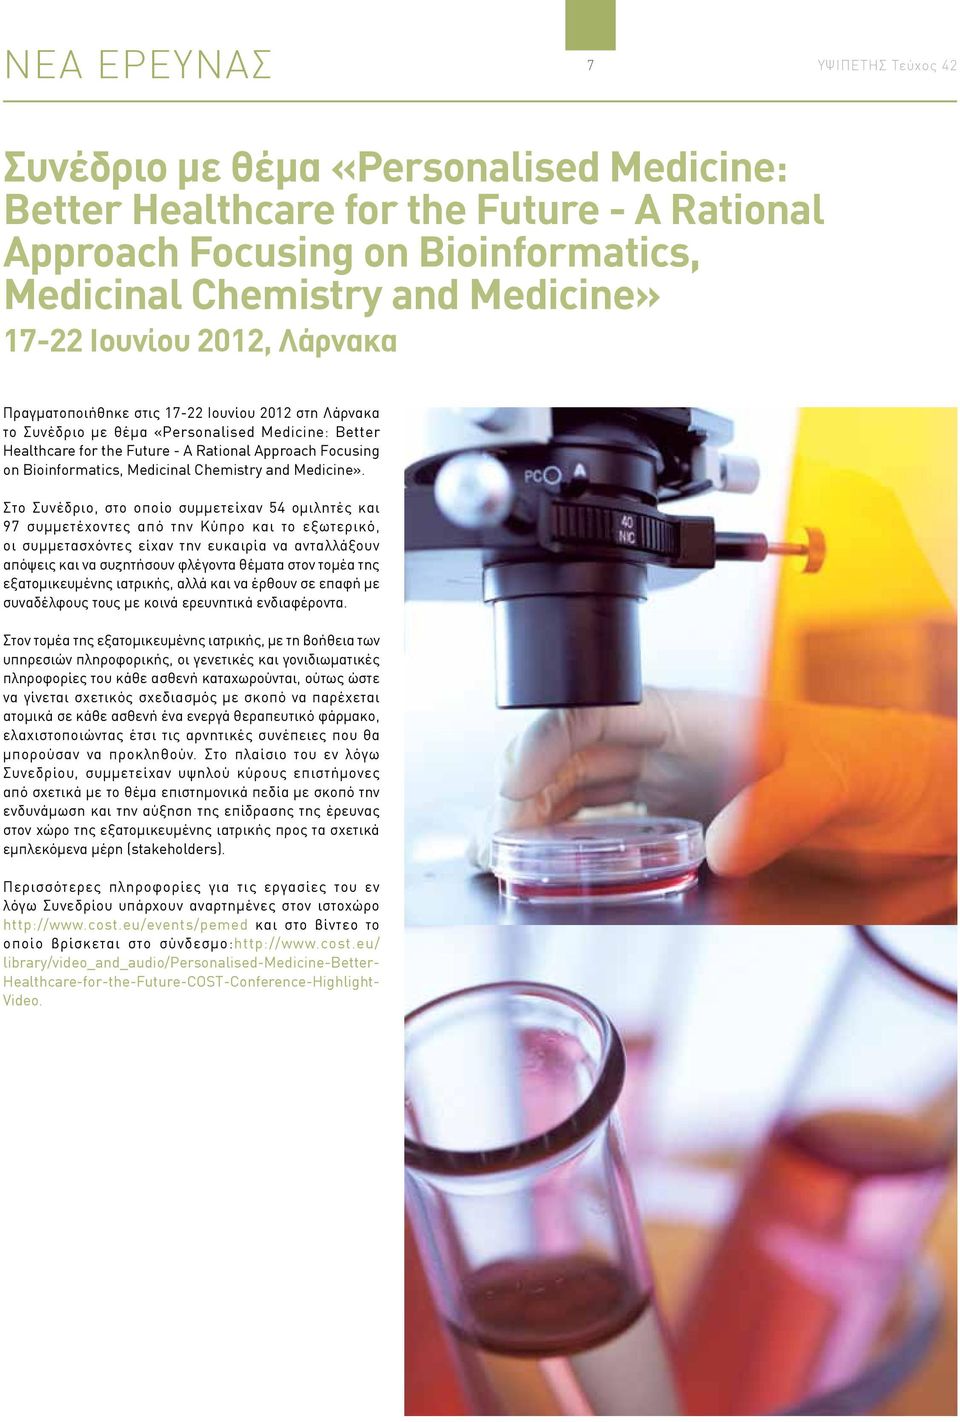 Bioinformatics, Medicinal Chemistry and Medicine».